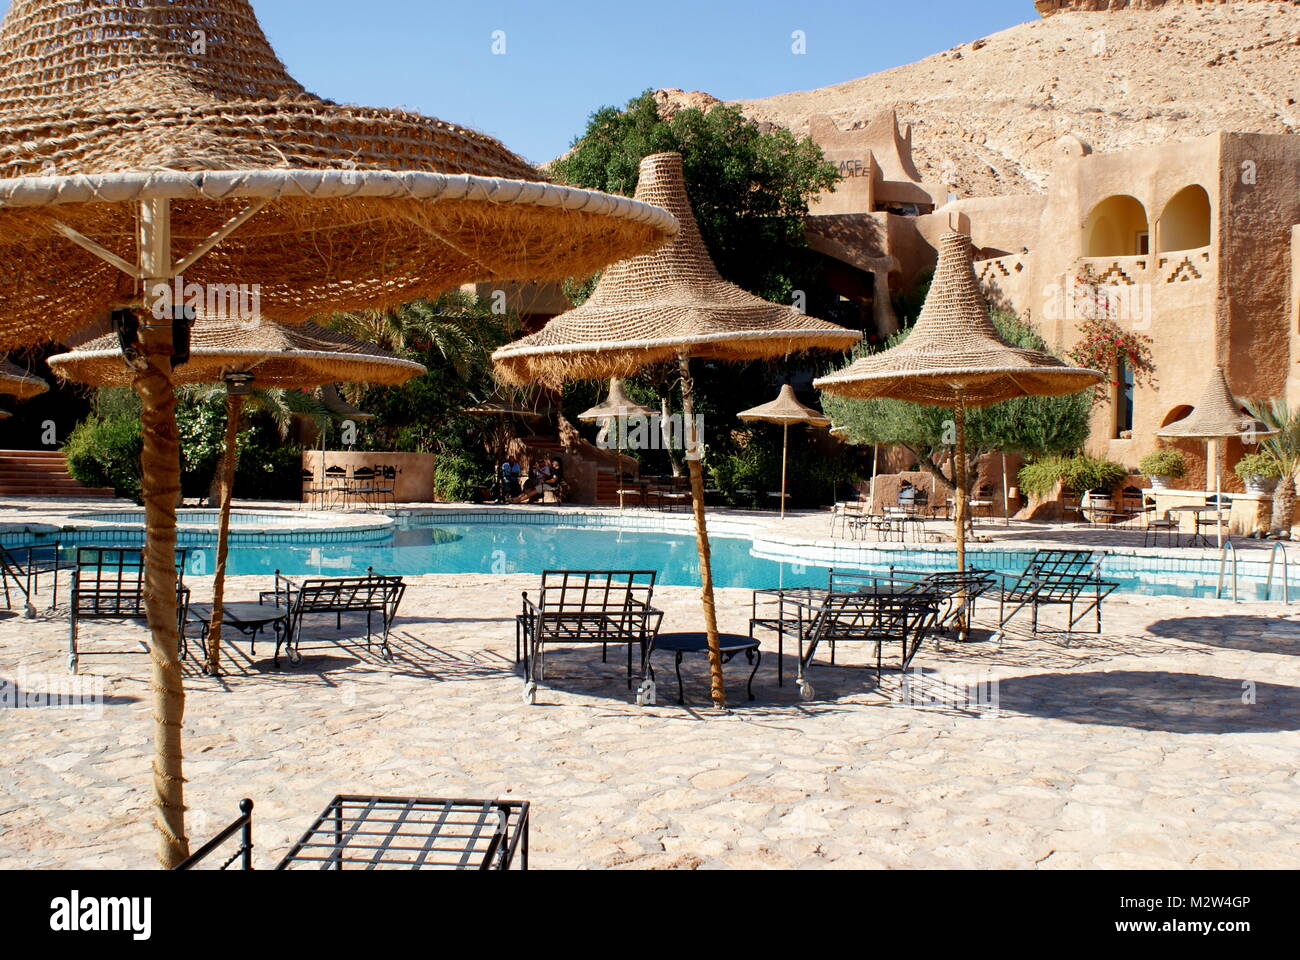 Poolside at the Tamerza Palace Hotel, Tamerza, Tunisia Stock Photo